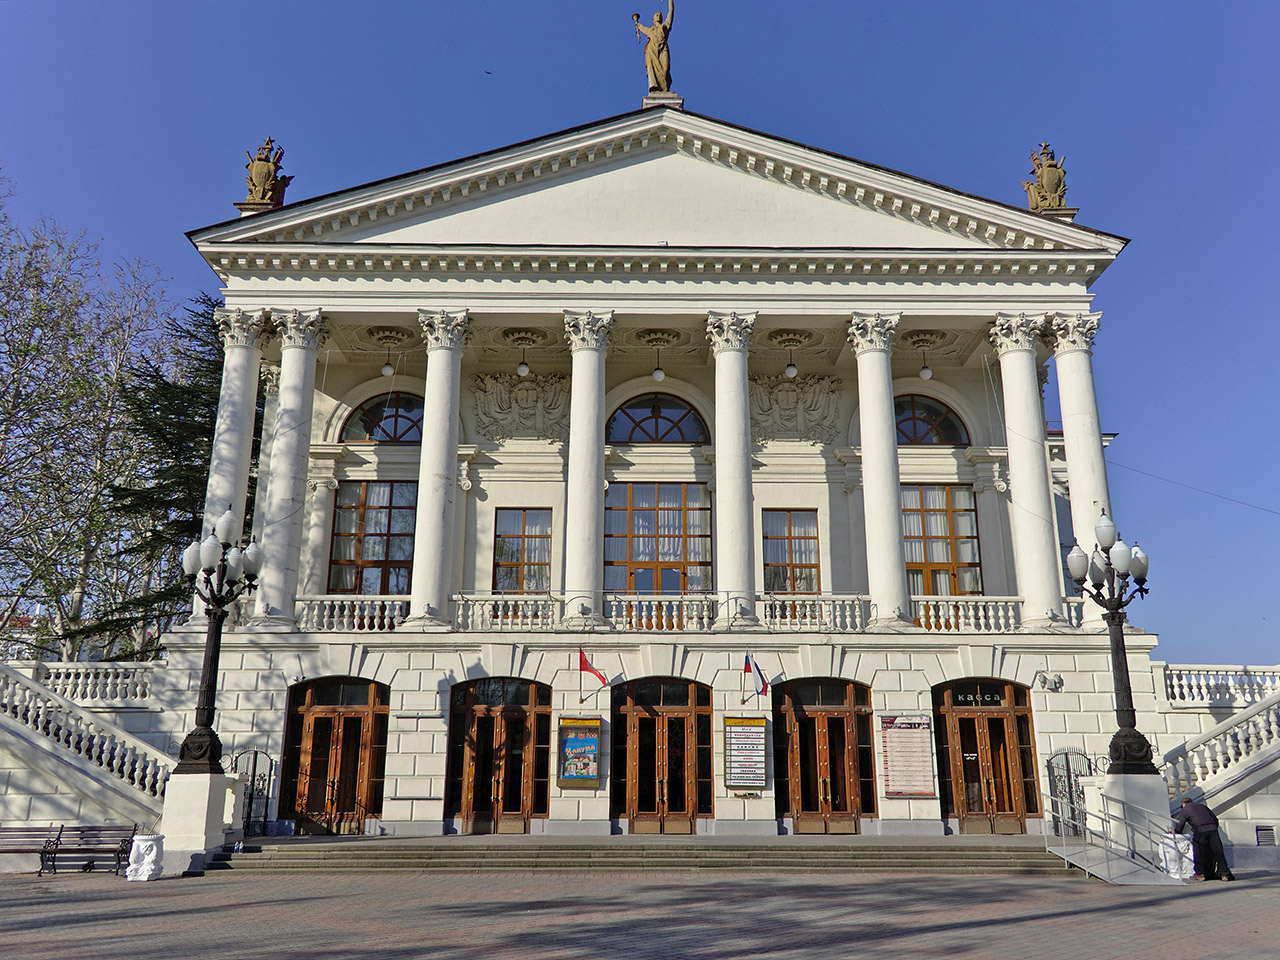 театр луначарского зал